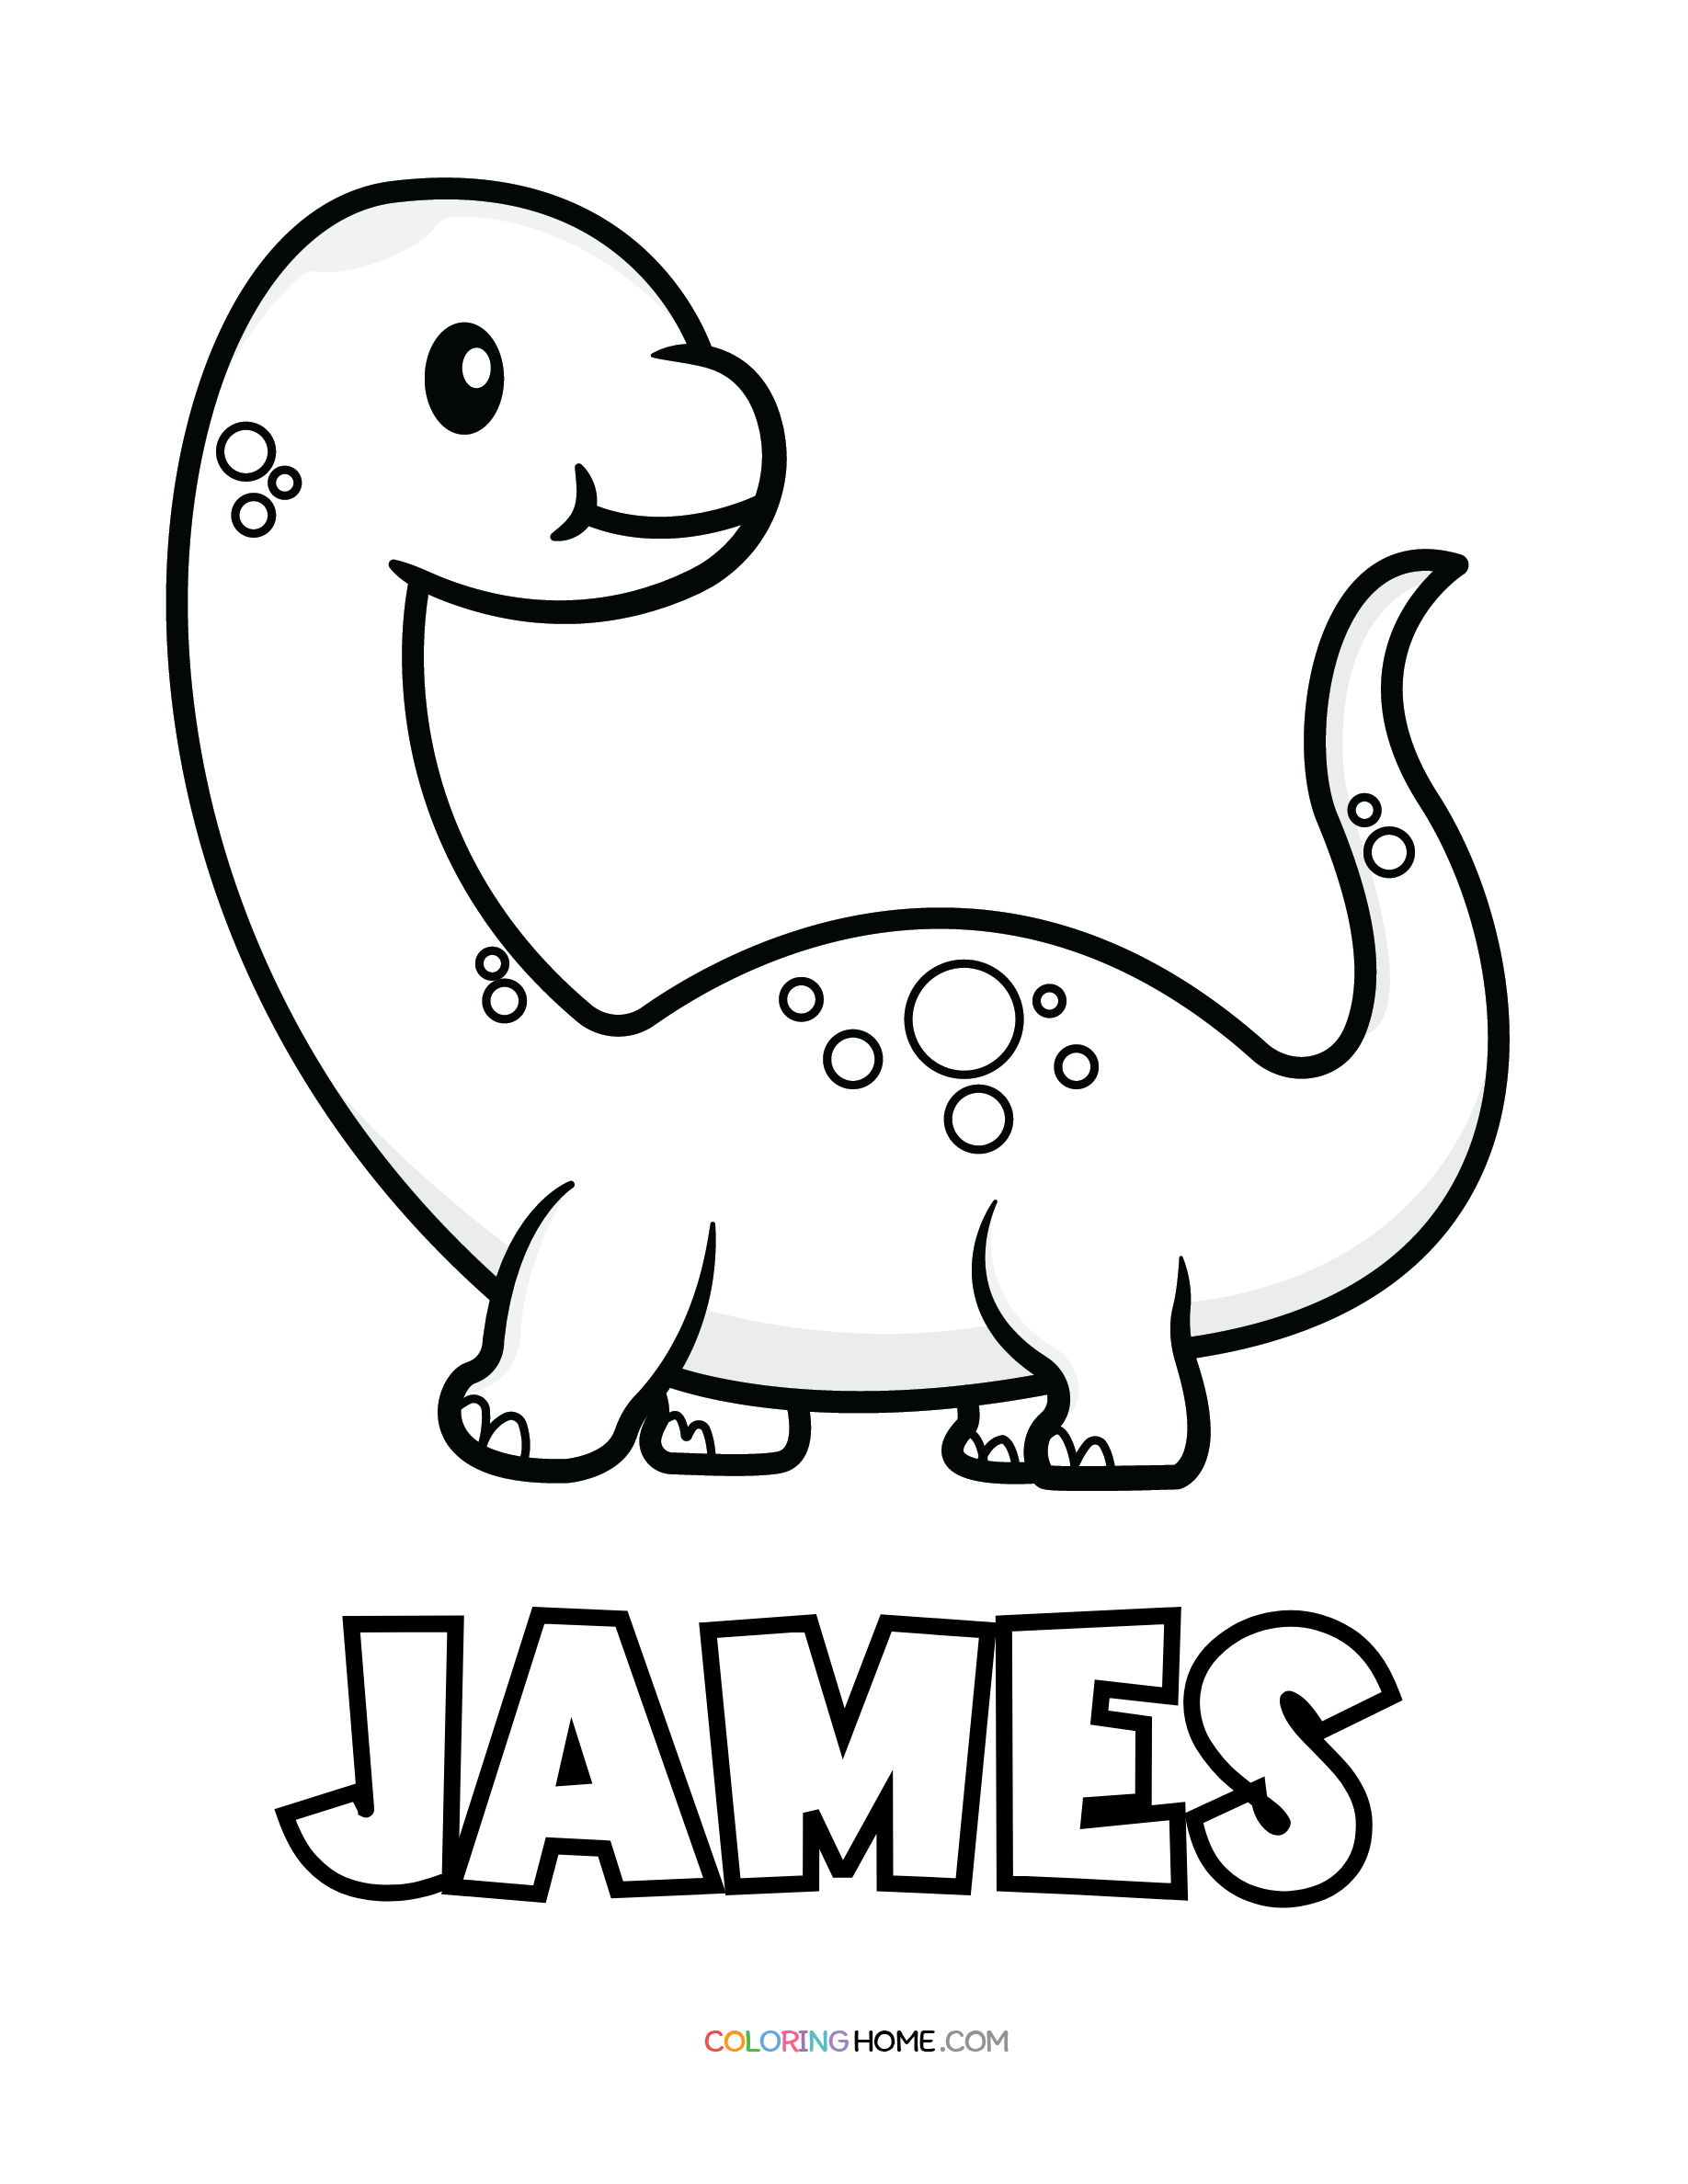 James dinosaur coloring page